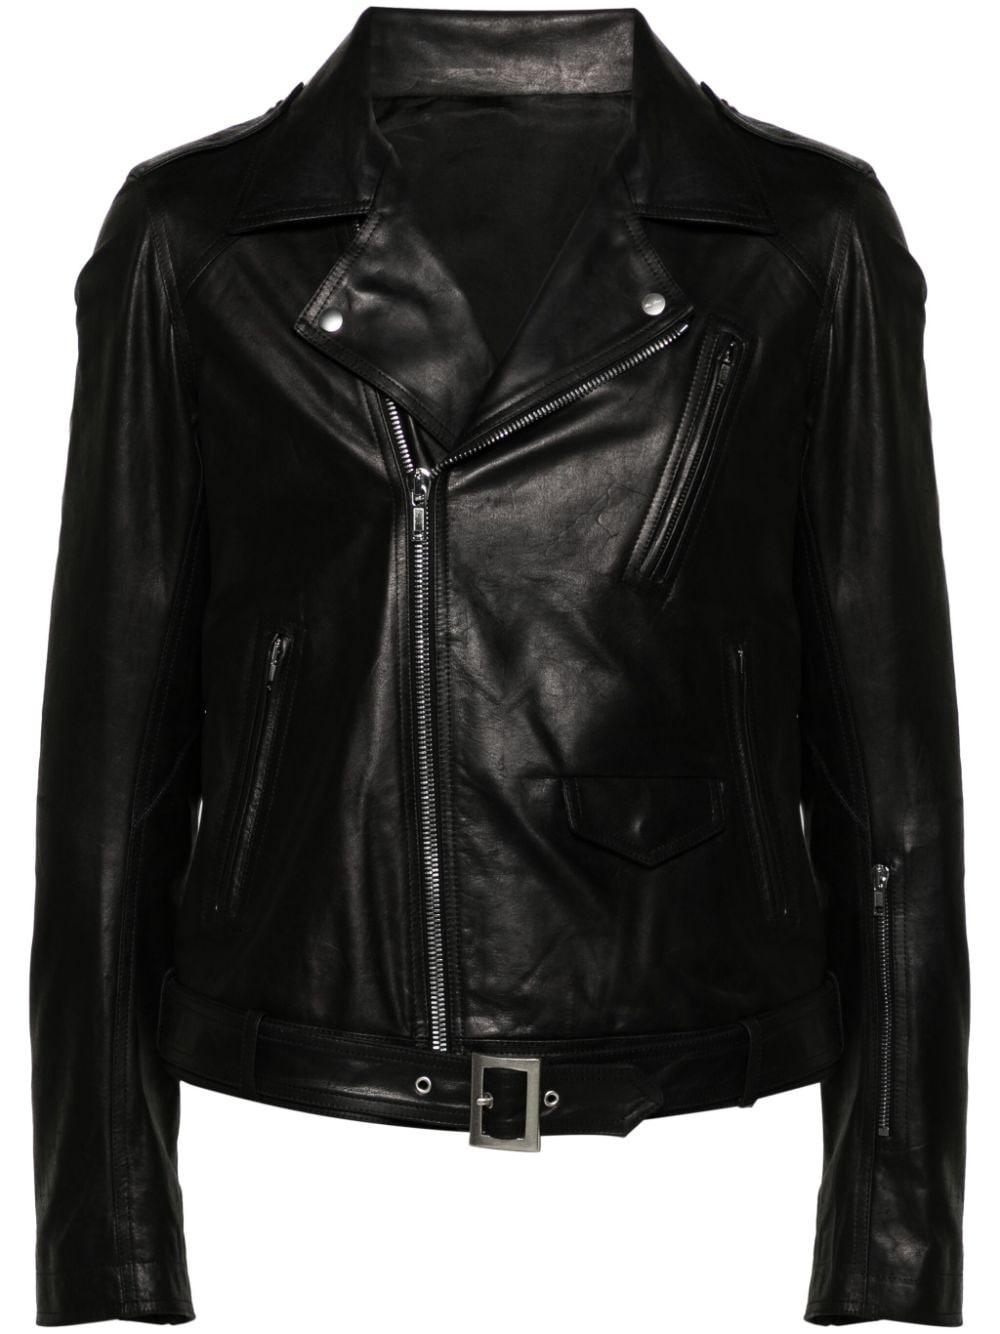 Lukes Stooges leather jacket - 1